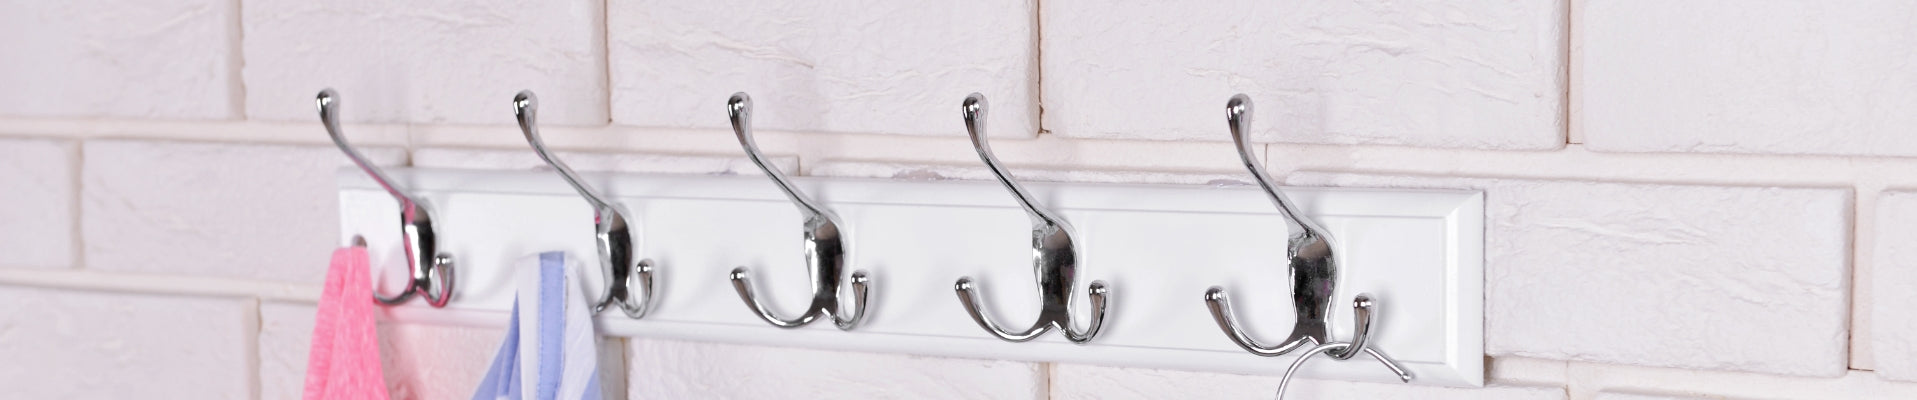 10 Hooks Door Behind Wall Hanging Hat Hooks Stainless Steel Coat Hanger  Kitchen Bathroom Clothes Hooks Storage Home Accessories